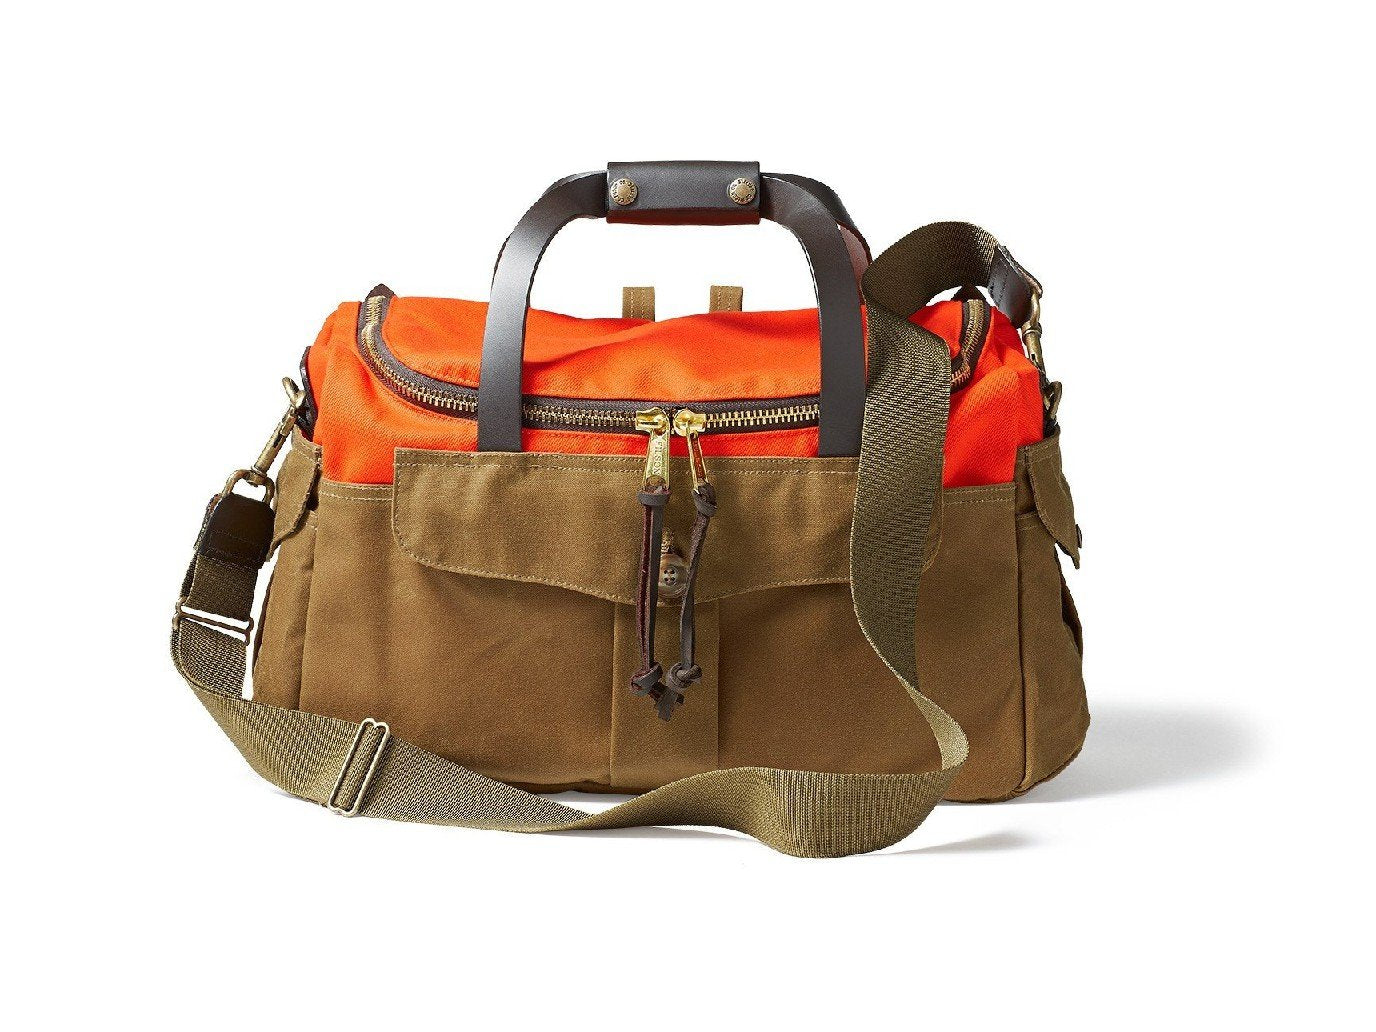 Front view of Filson Heritage Sportsman bag in orange and dark tan